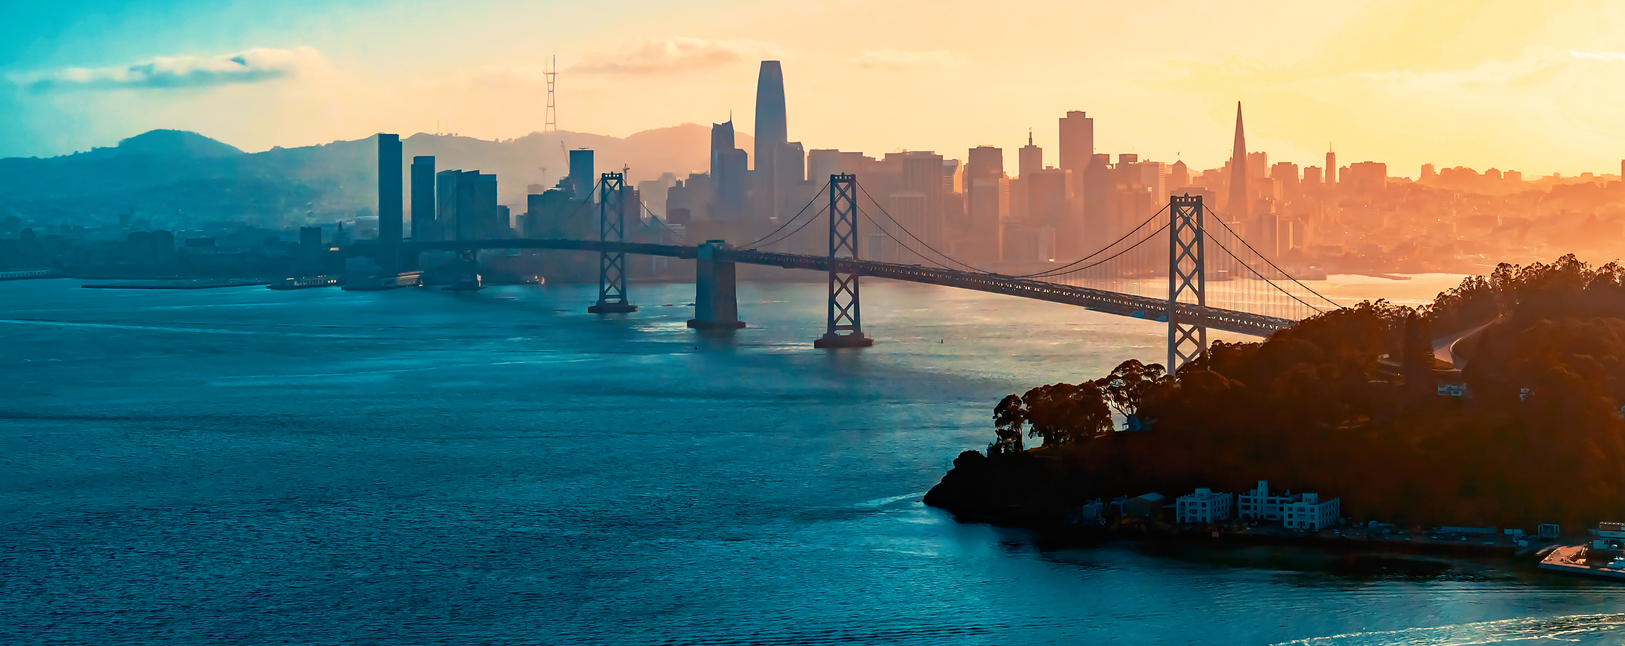 Aerial view of the Bay Bridge in San Francisco